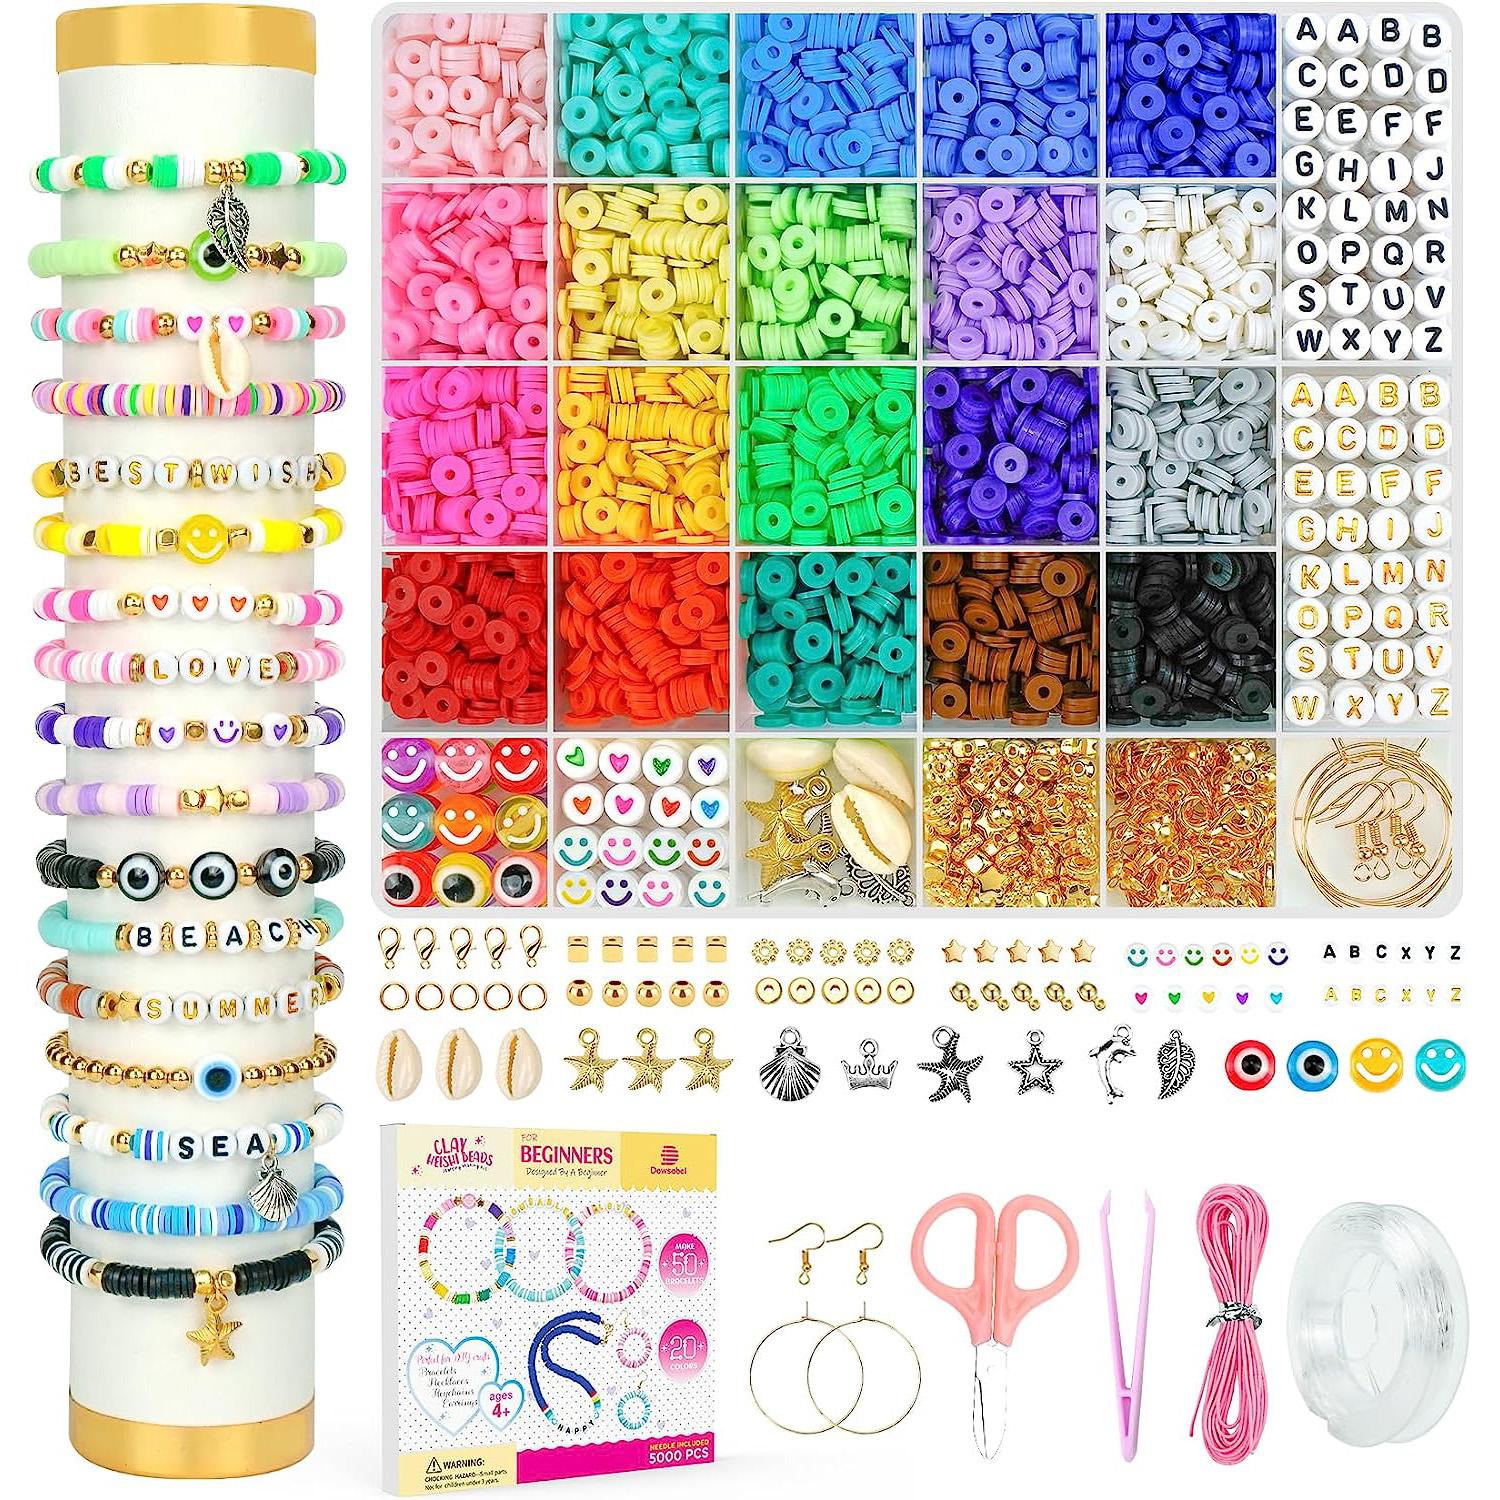 Dowsabel Beads 5000-Piece Bracelet Making Kit for $4.79